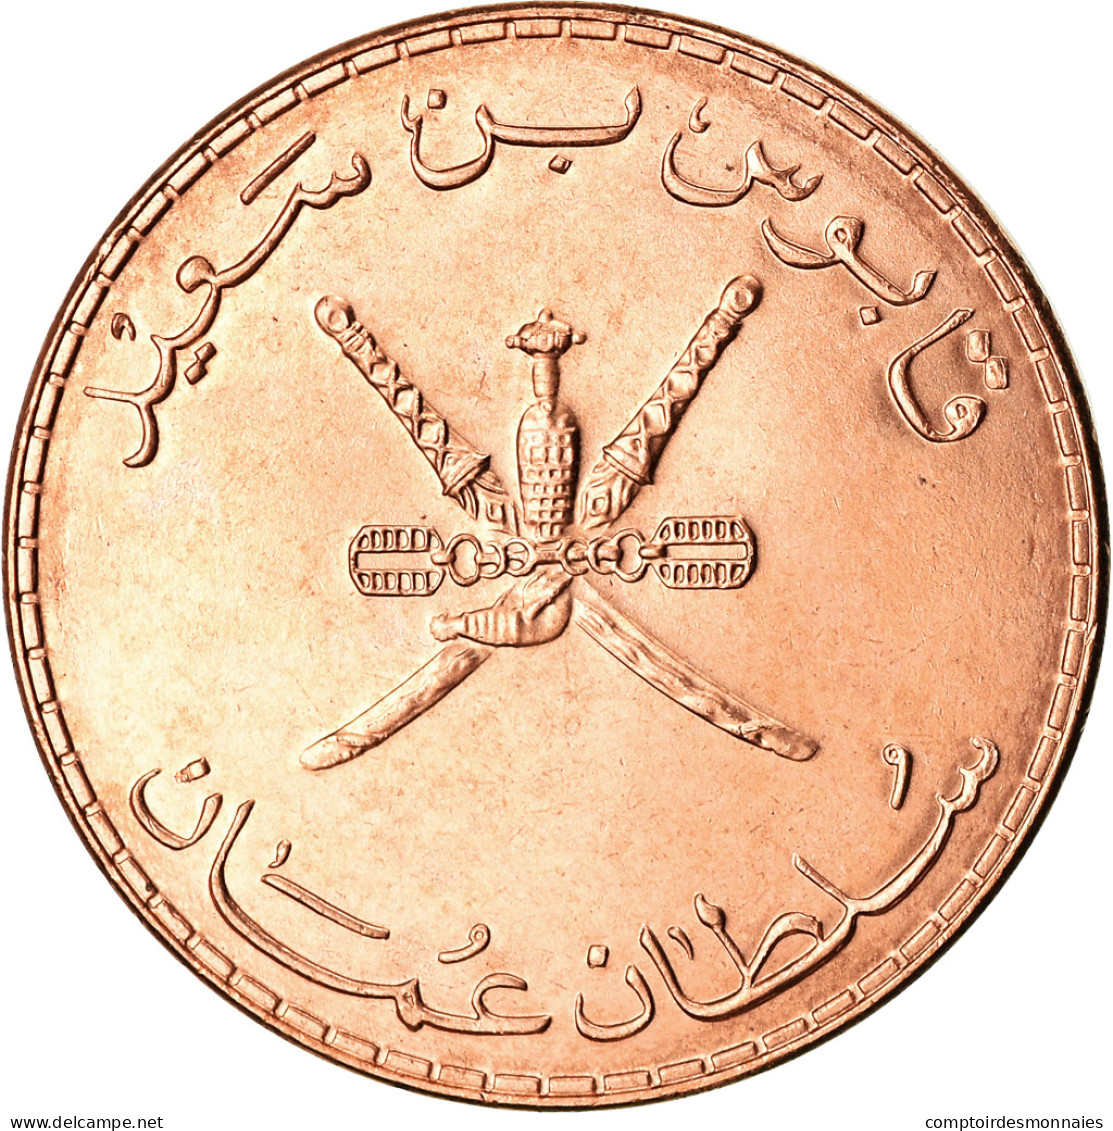 Monnaie, Oman, Qabus Bin Sa'id, 10 Baisa, 2011, British Royal Mint, SPL+, Bronze - Oman